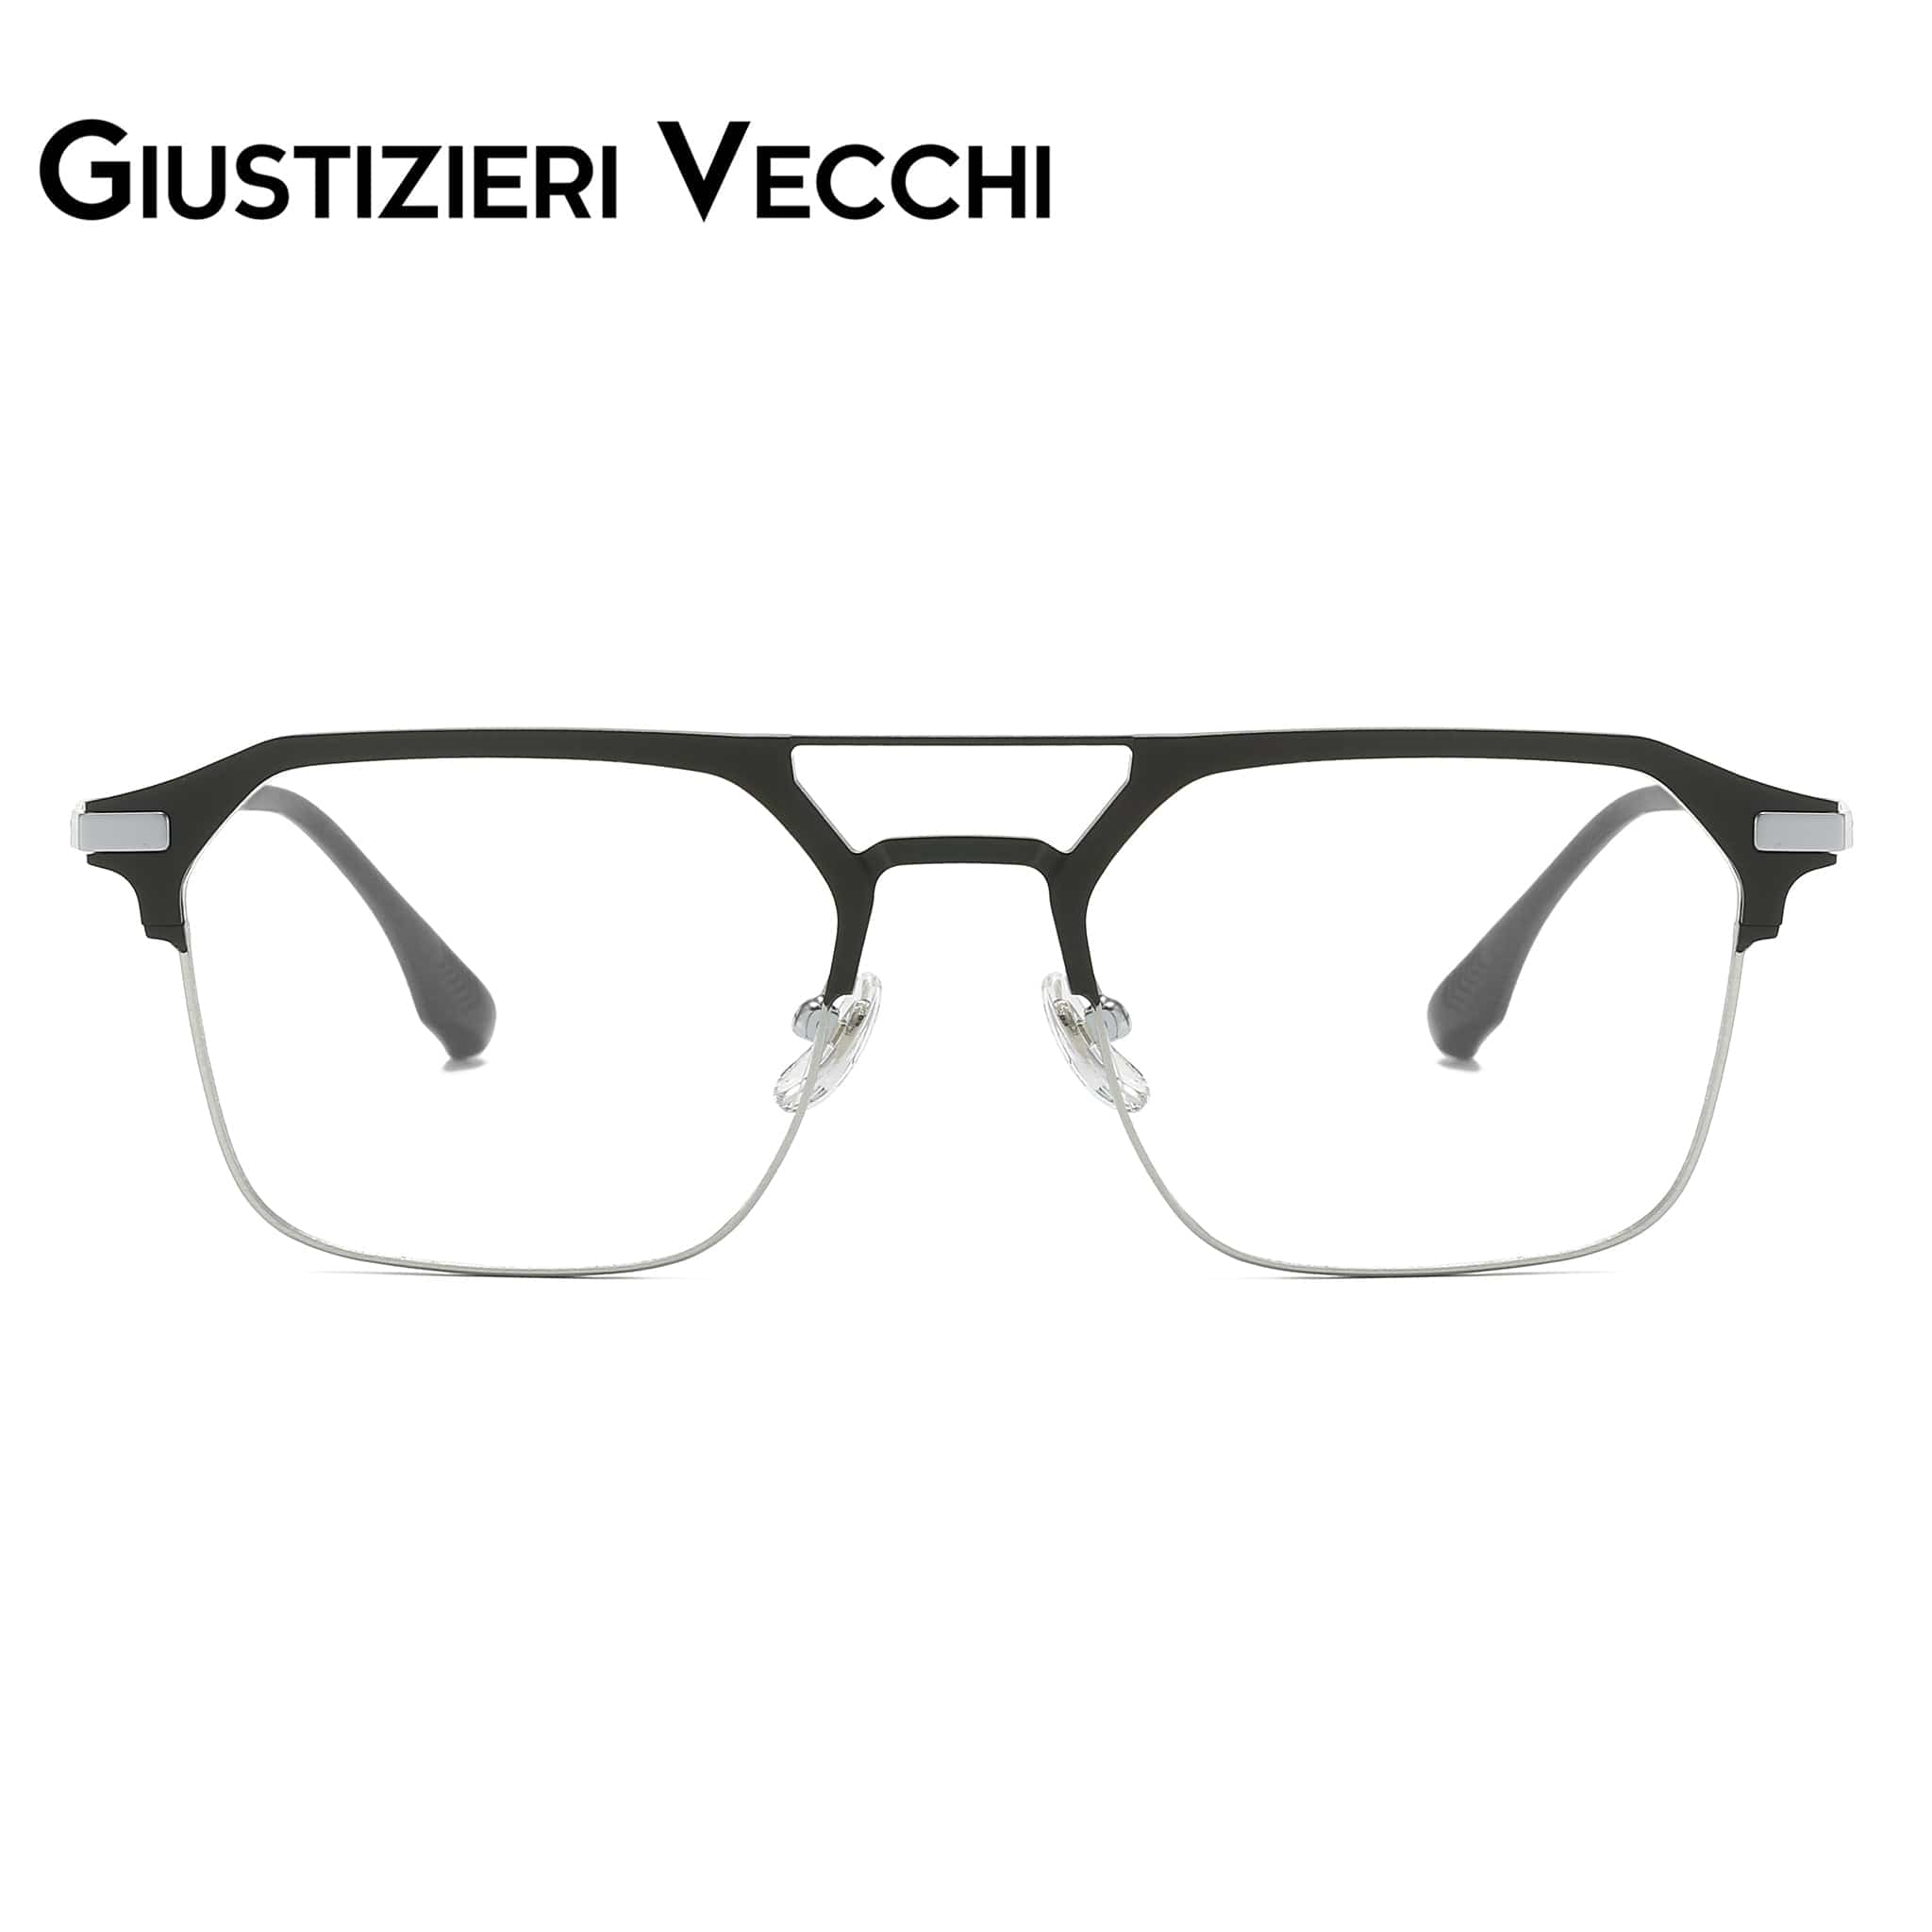 GIUSTIZIERI VECCHI Eyeglasses Medium / Black with Silver IceBlast Uno